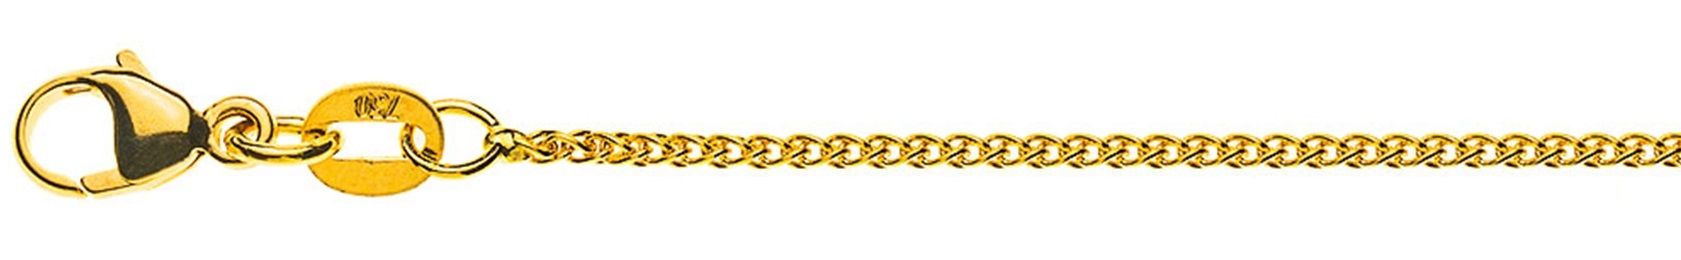 AURONOS Prestige Necklace yellow gold 18K cable chain 50cm 1.2mm